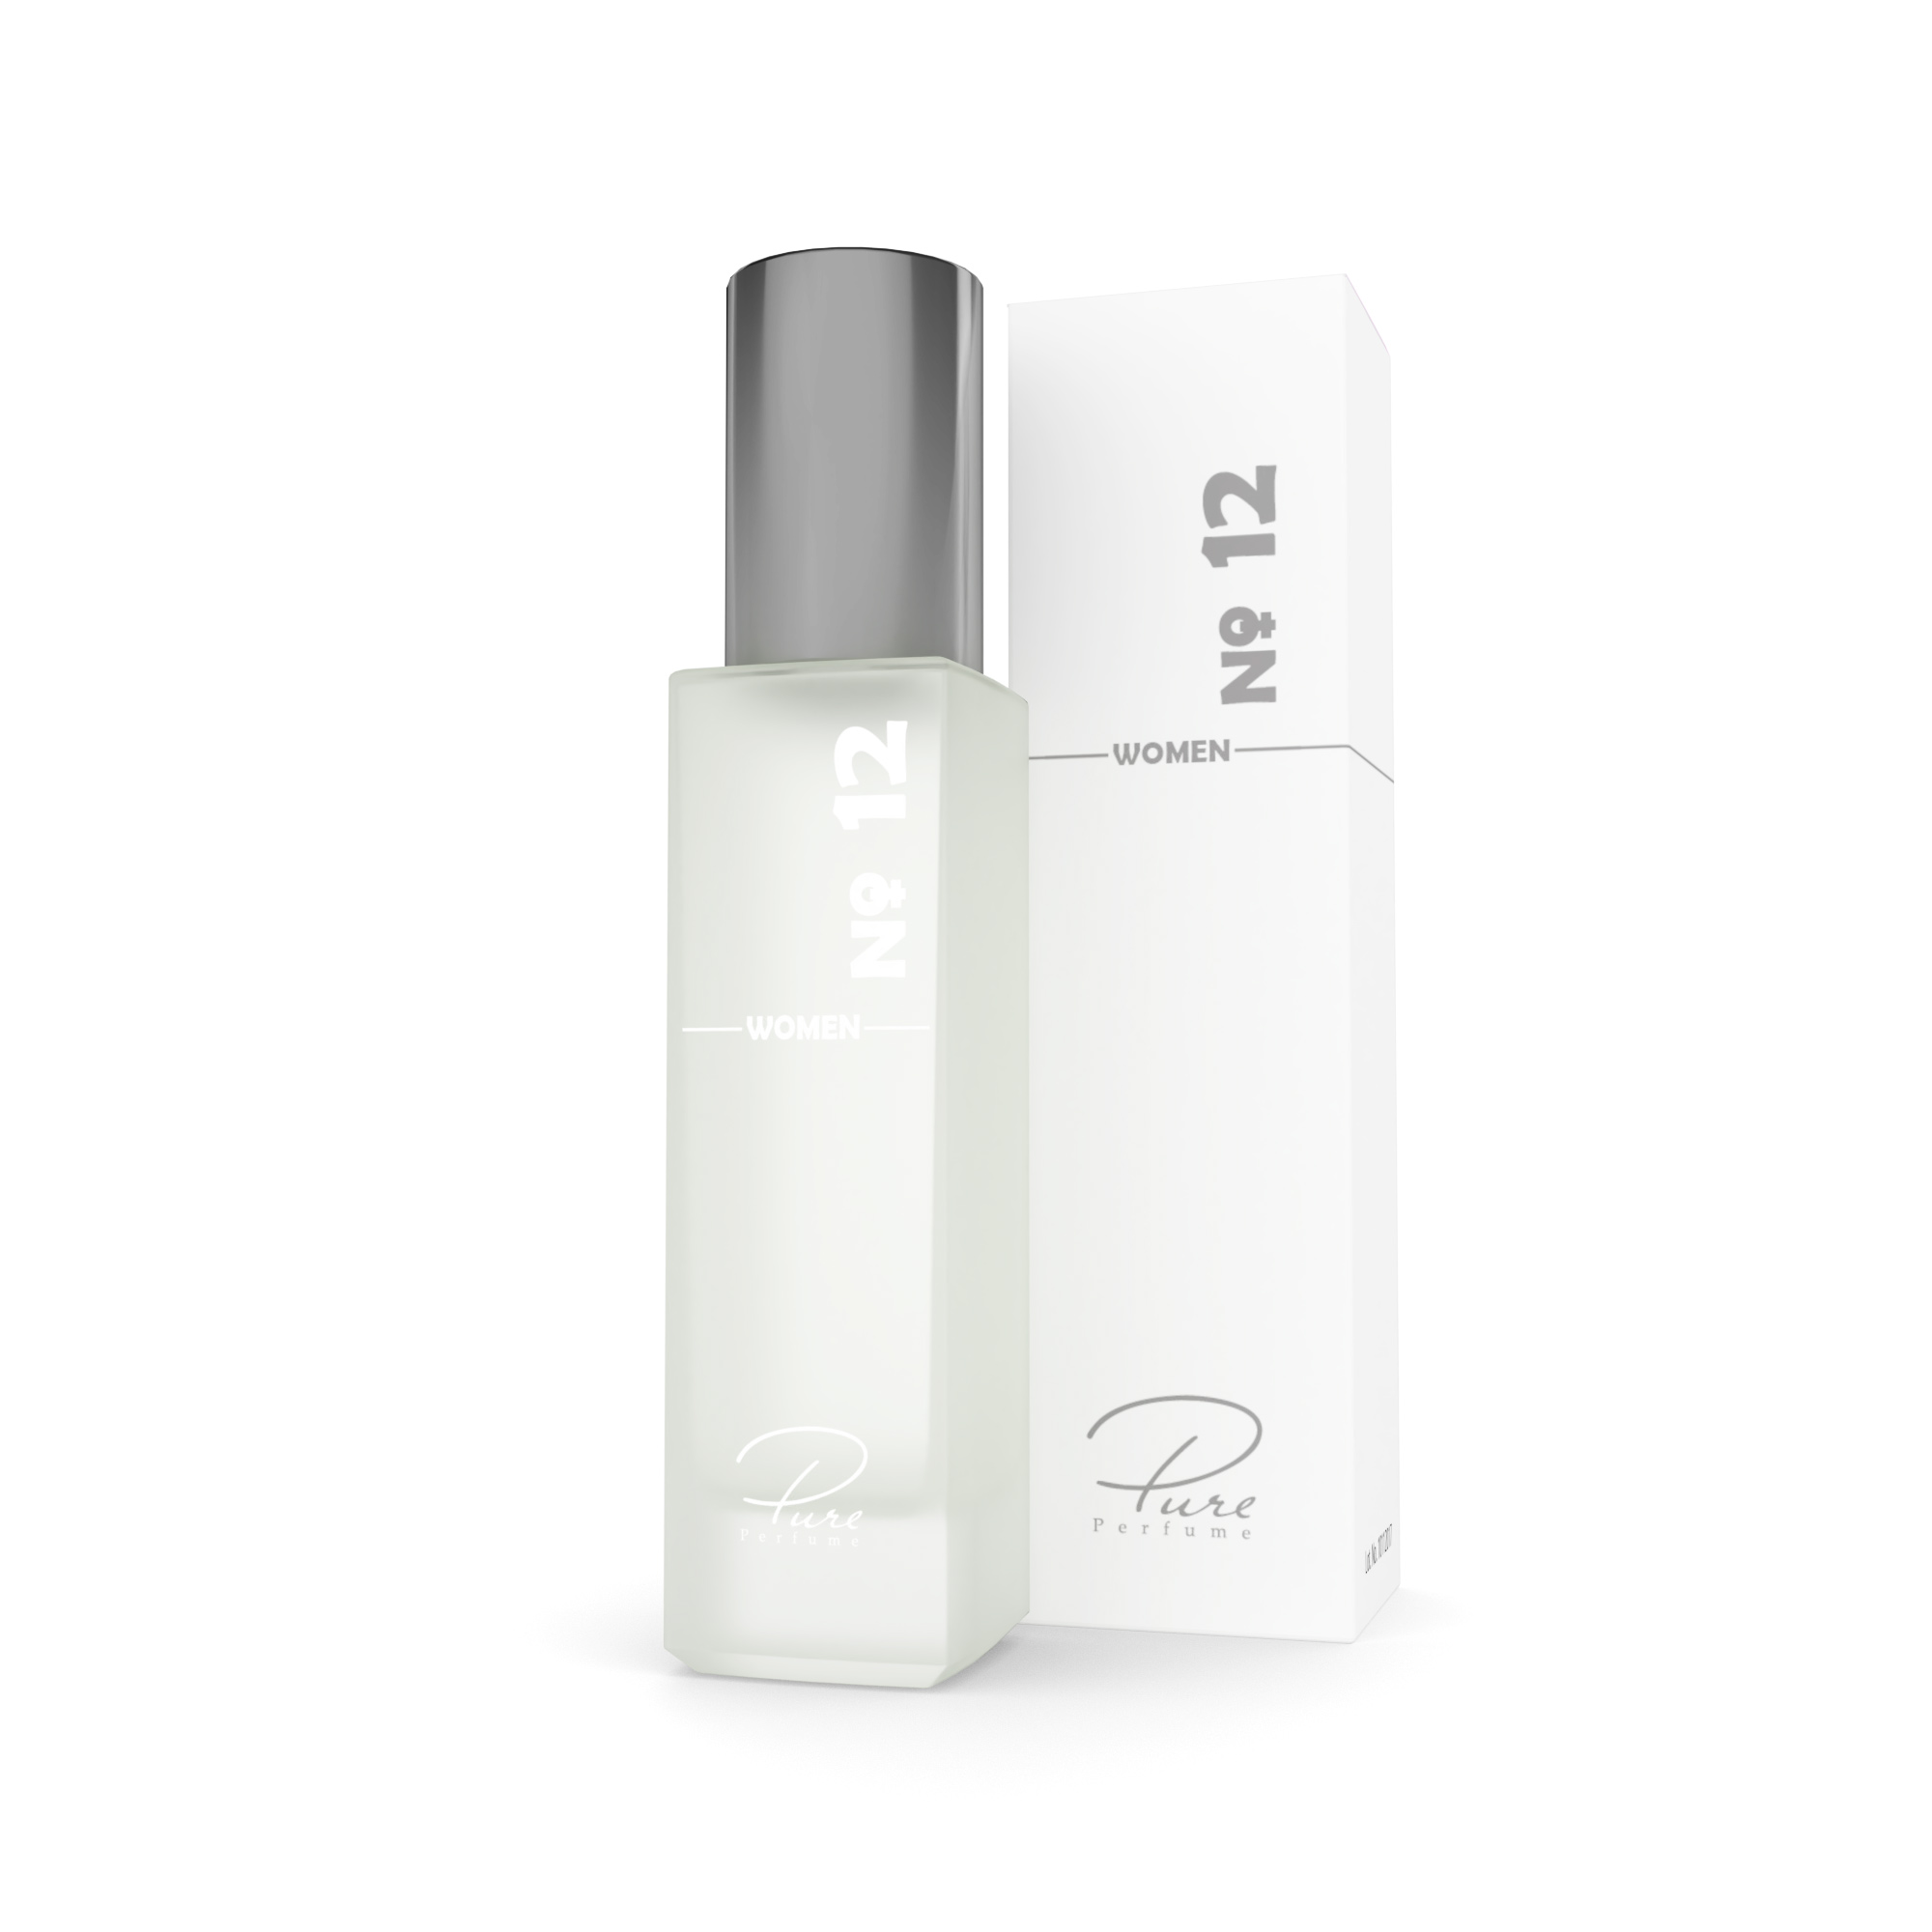 Parfum no 12 - floral perfume for women 15 ml